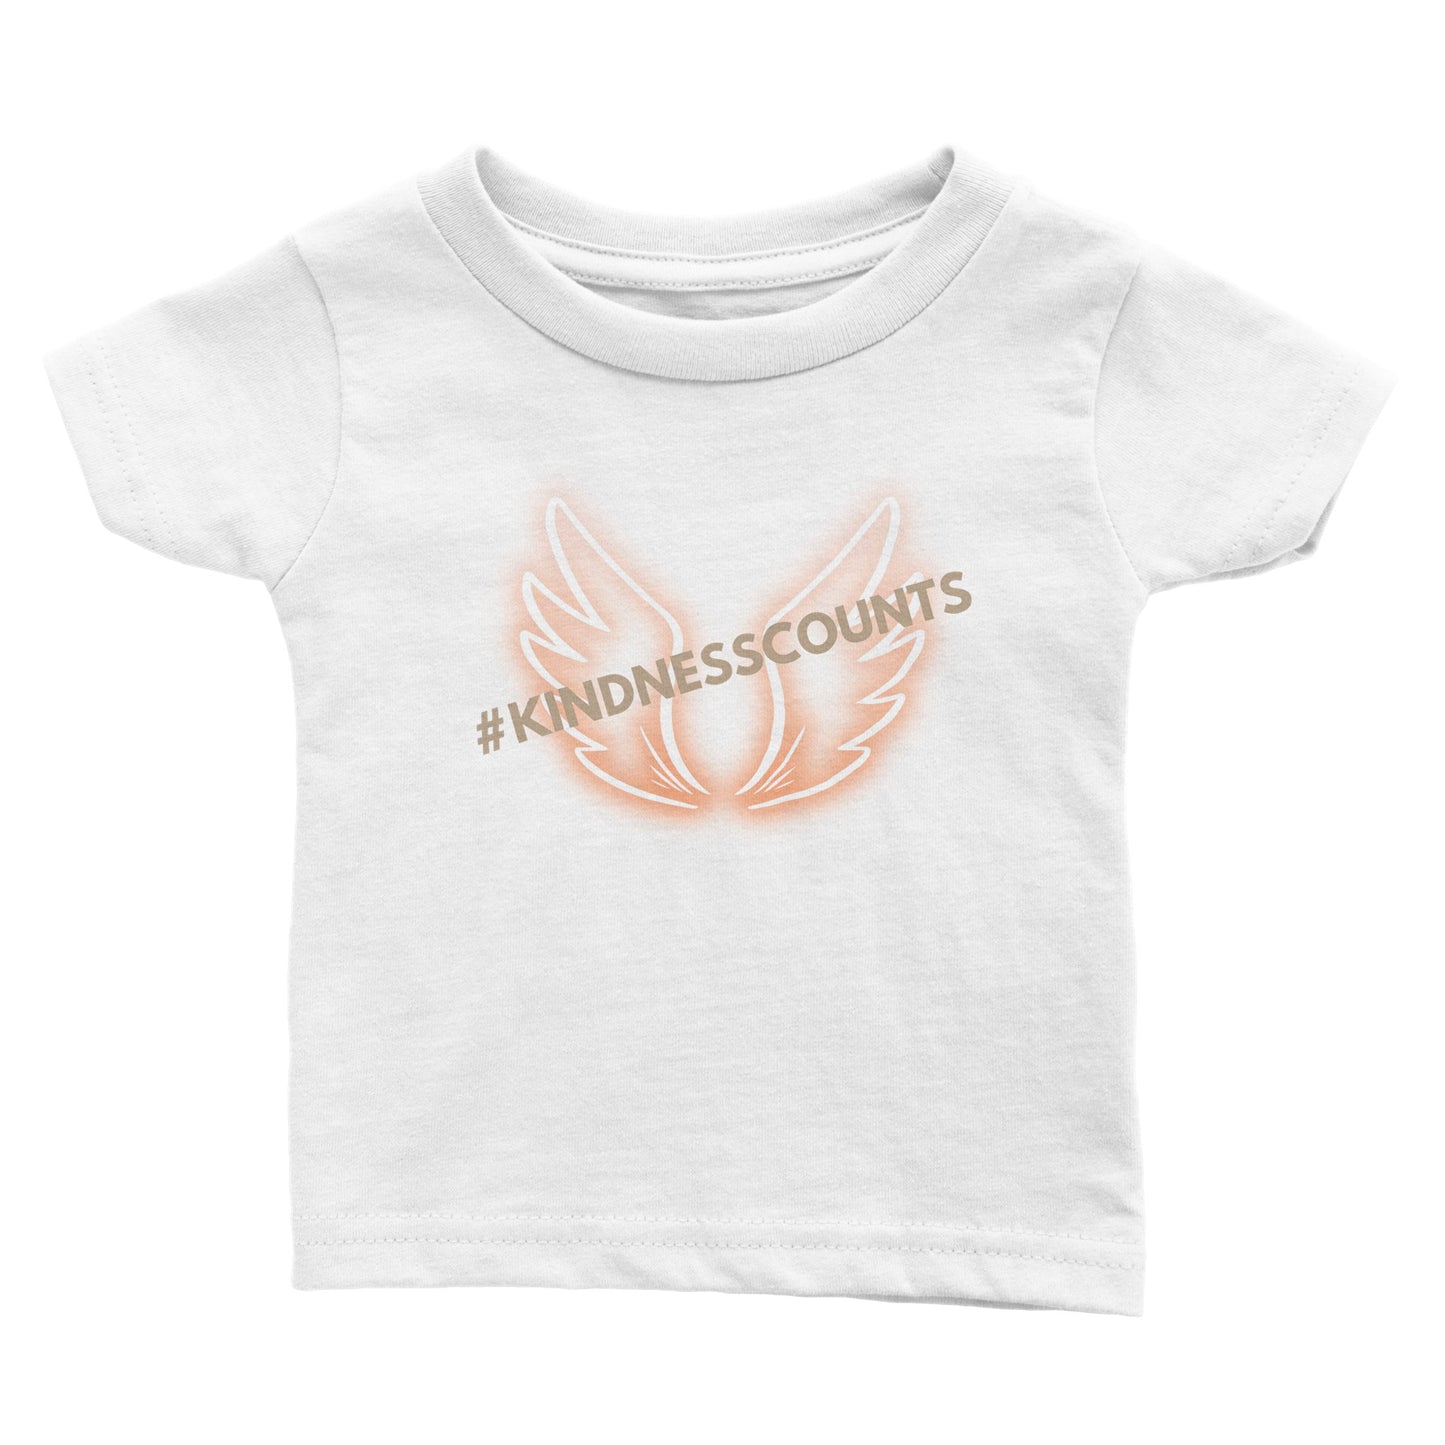 Angel Wings Classic Baby Crewneck T-shirt